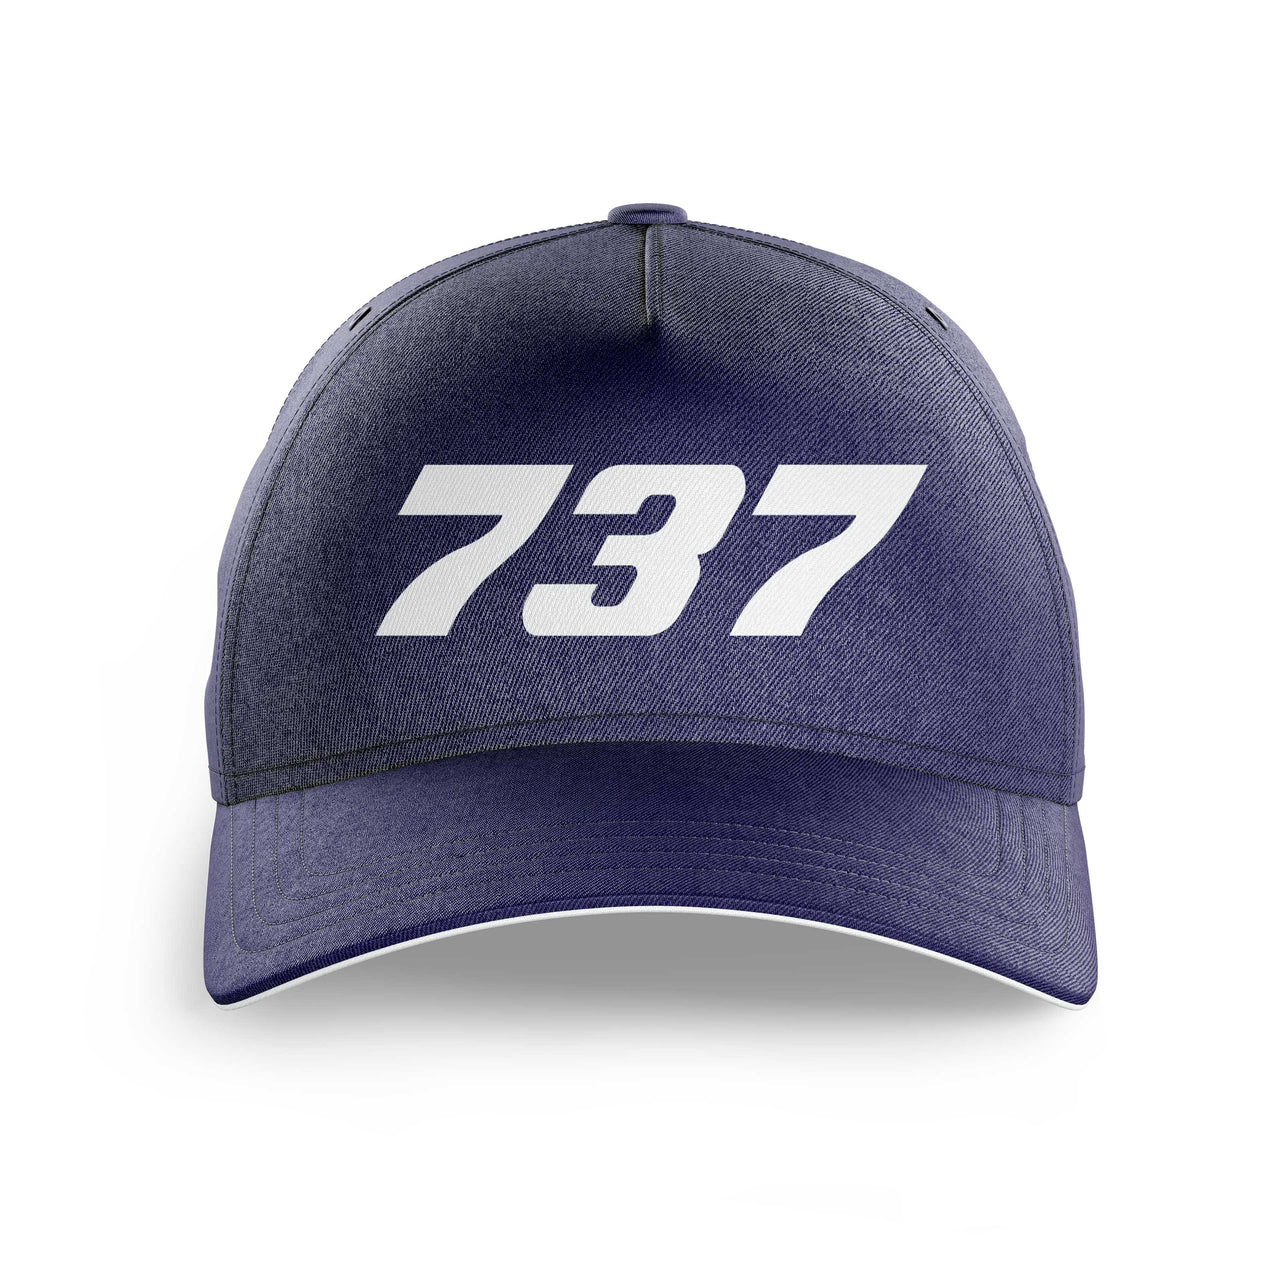 737 Flat Text Printed Hats